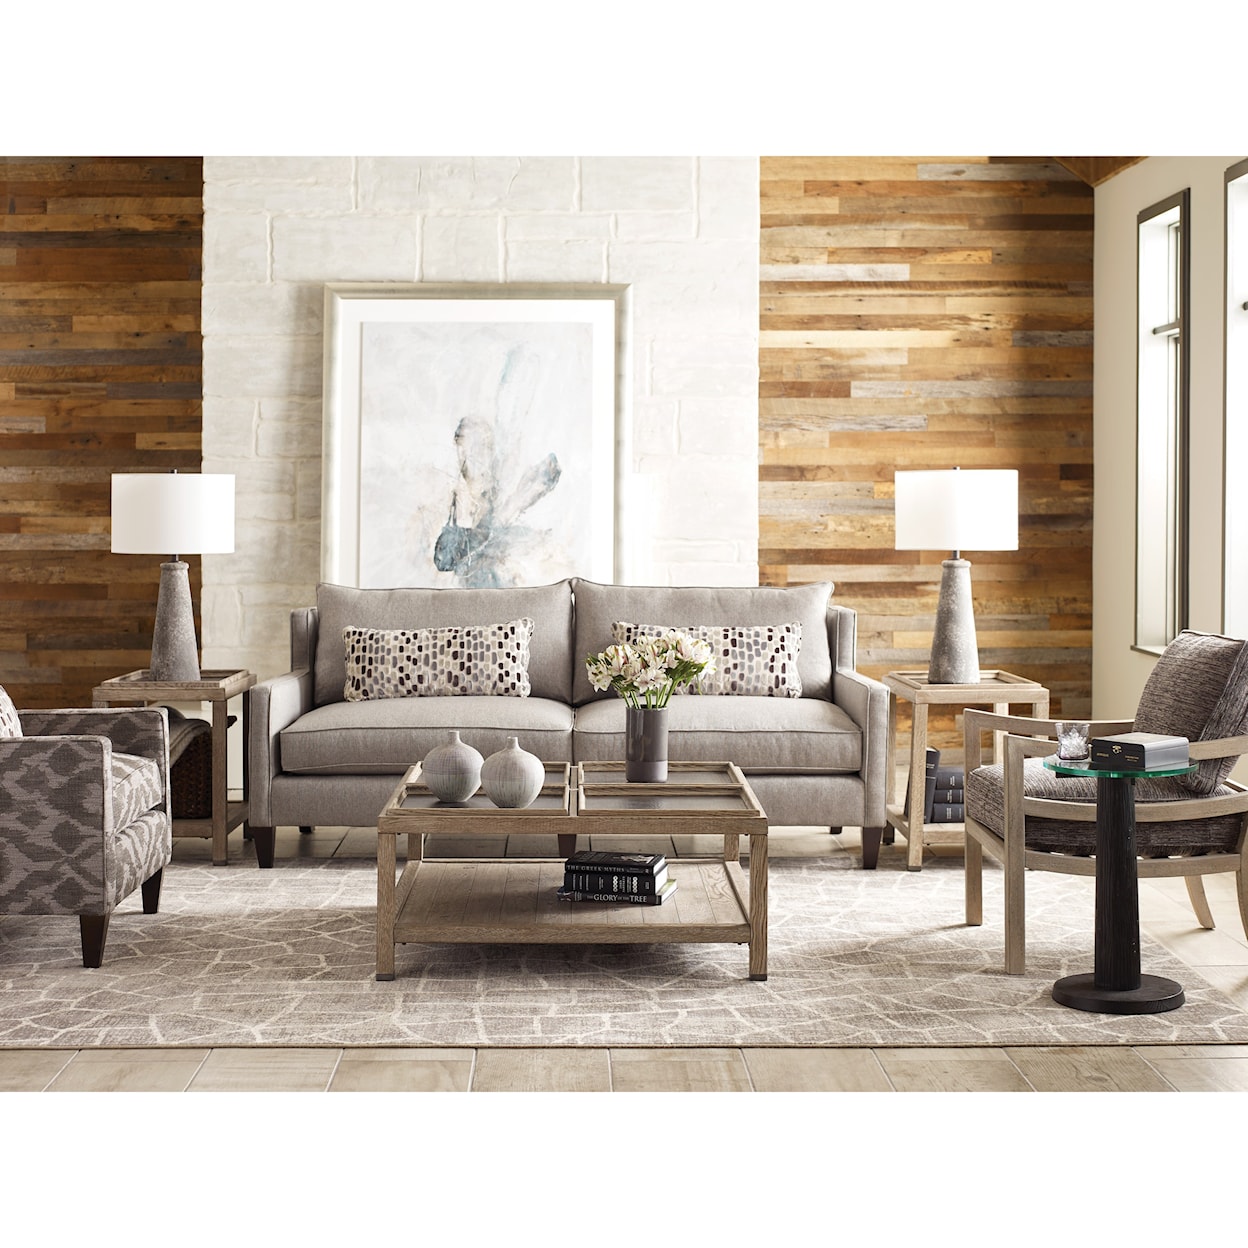 Kincaid Furniture Trails Elements Square Coffee Table